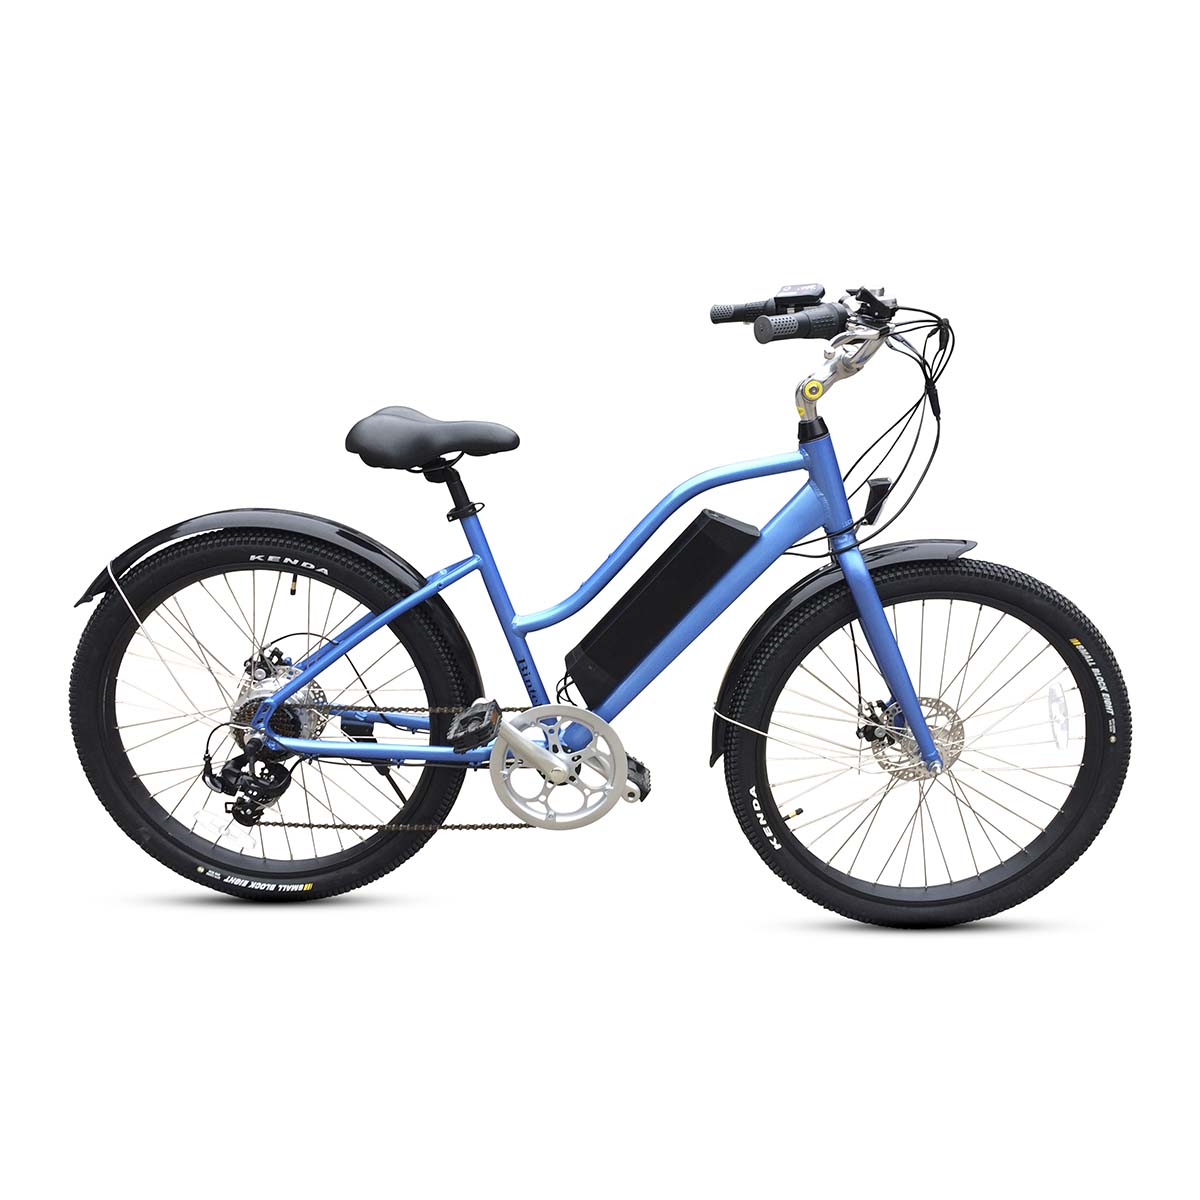 The blue bintelli B1 electric bicycles cruiser in USA